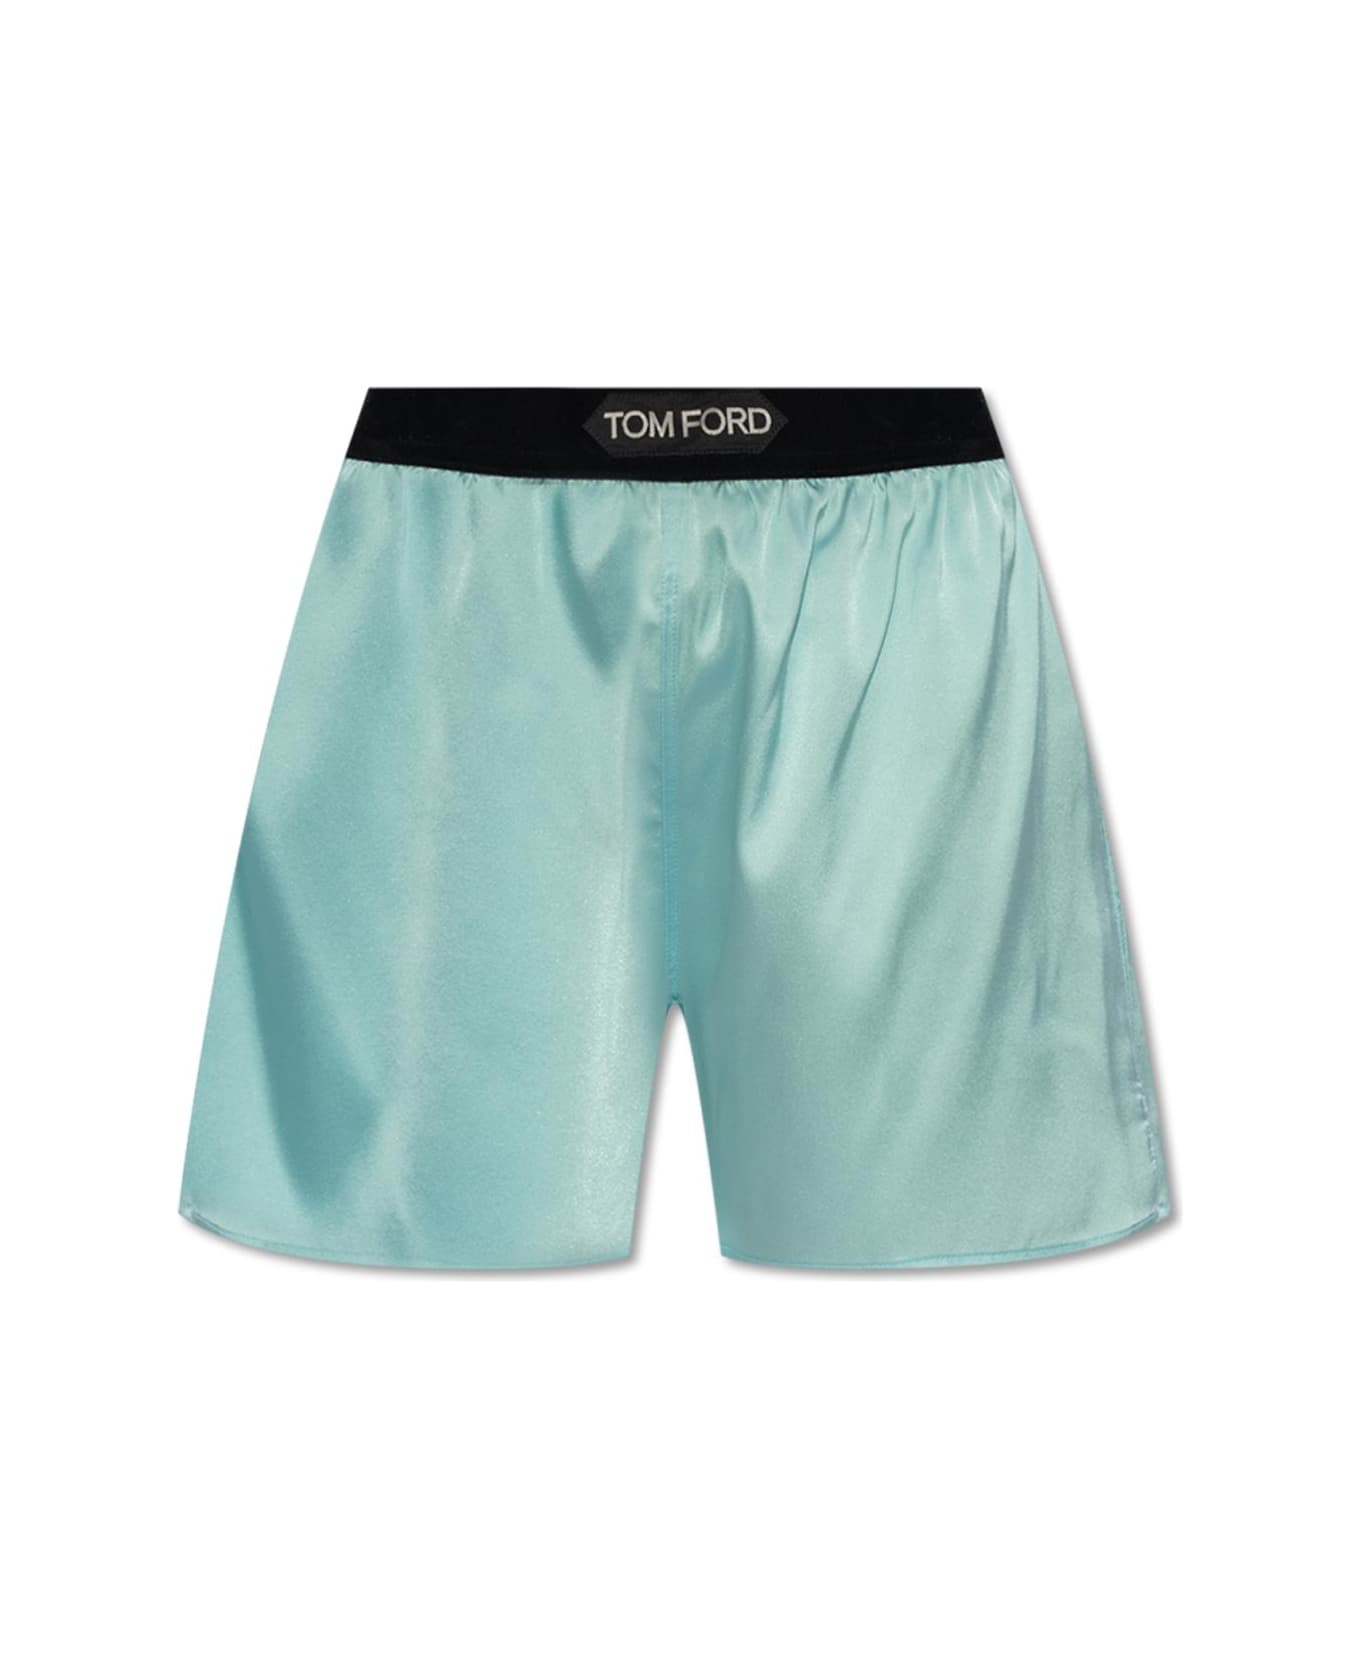 Tom Ford Silk Underwear Shorts - PLUME